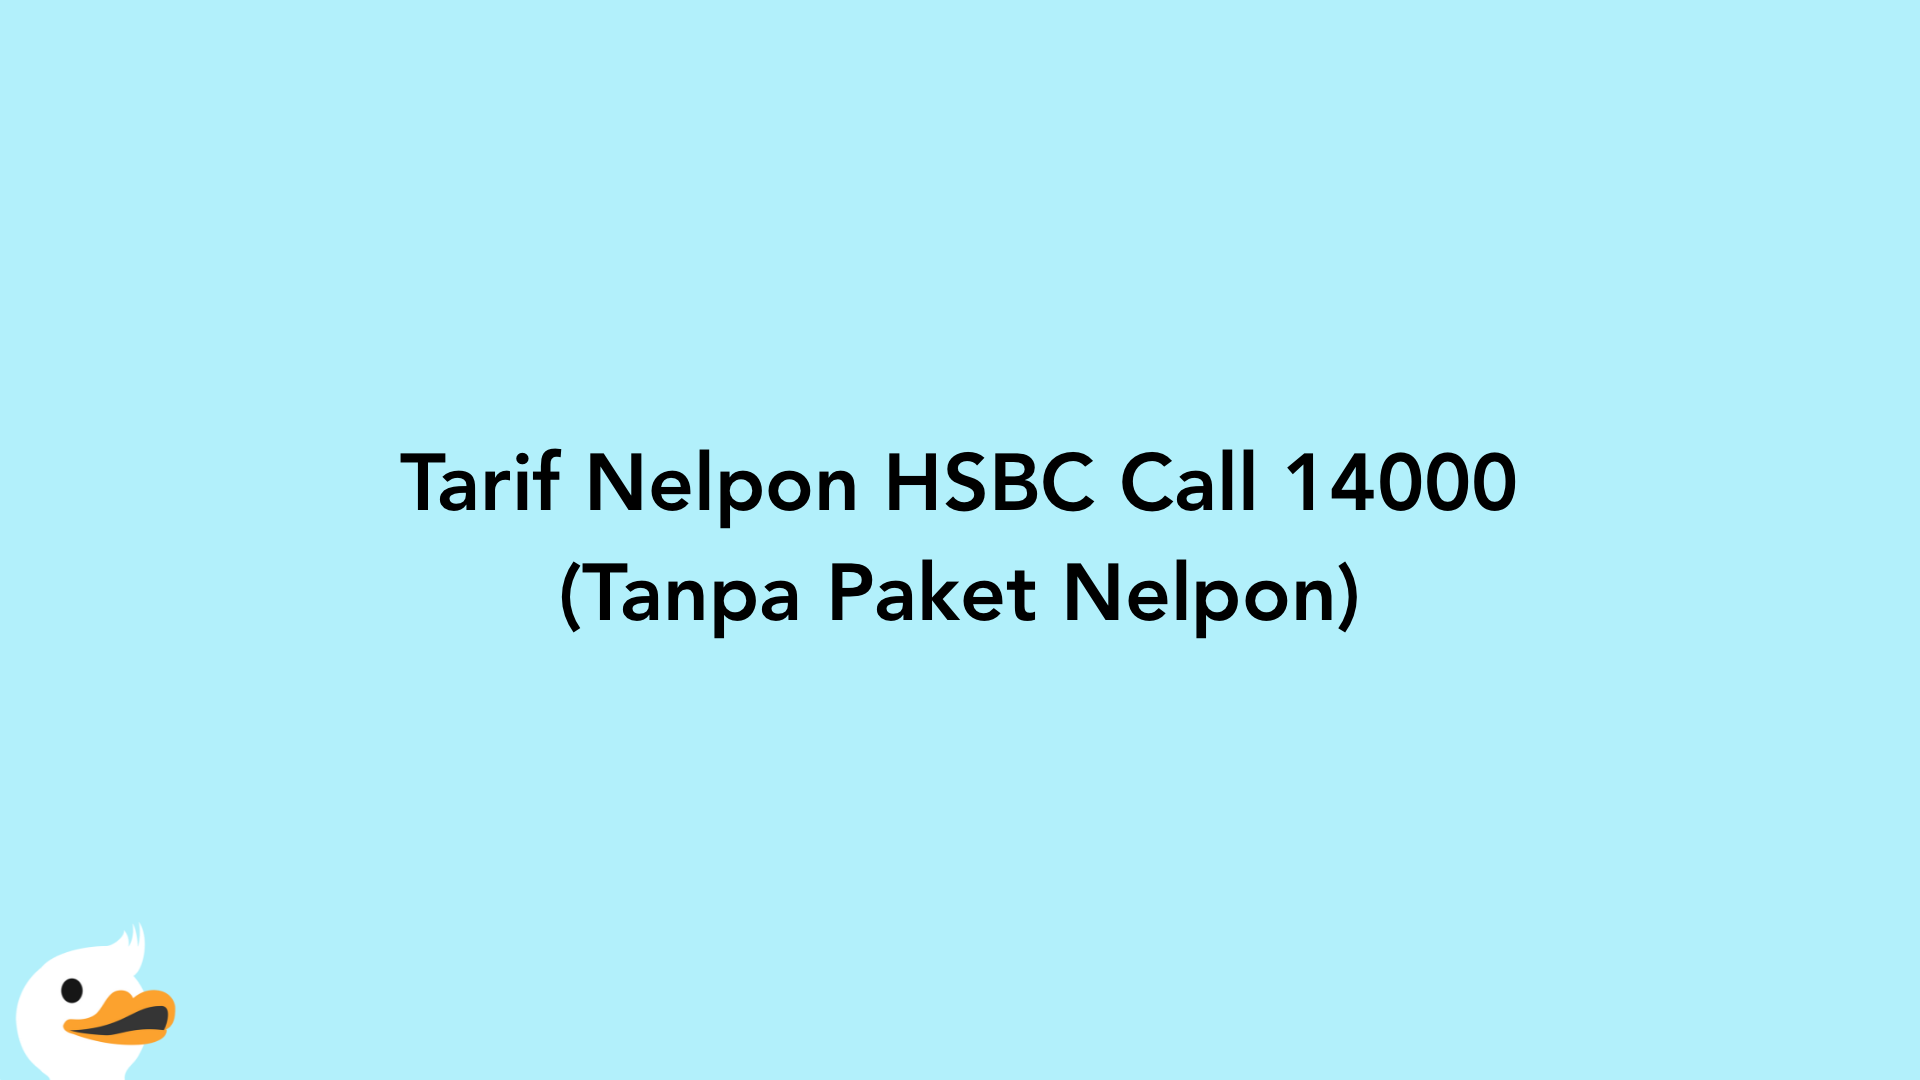 Tarif Nelpon HSBC Call 14000 (Tanpa Paket Nelpon)